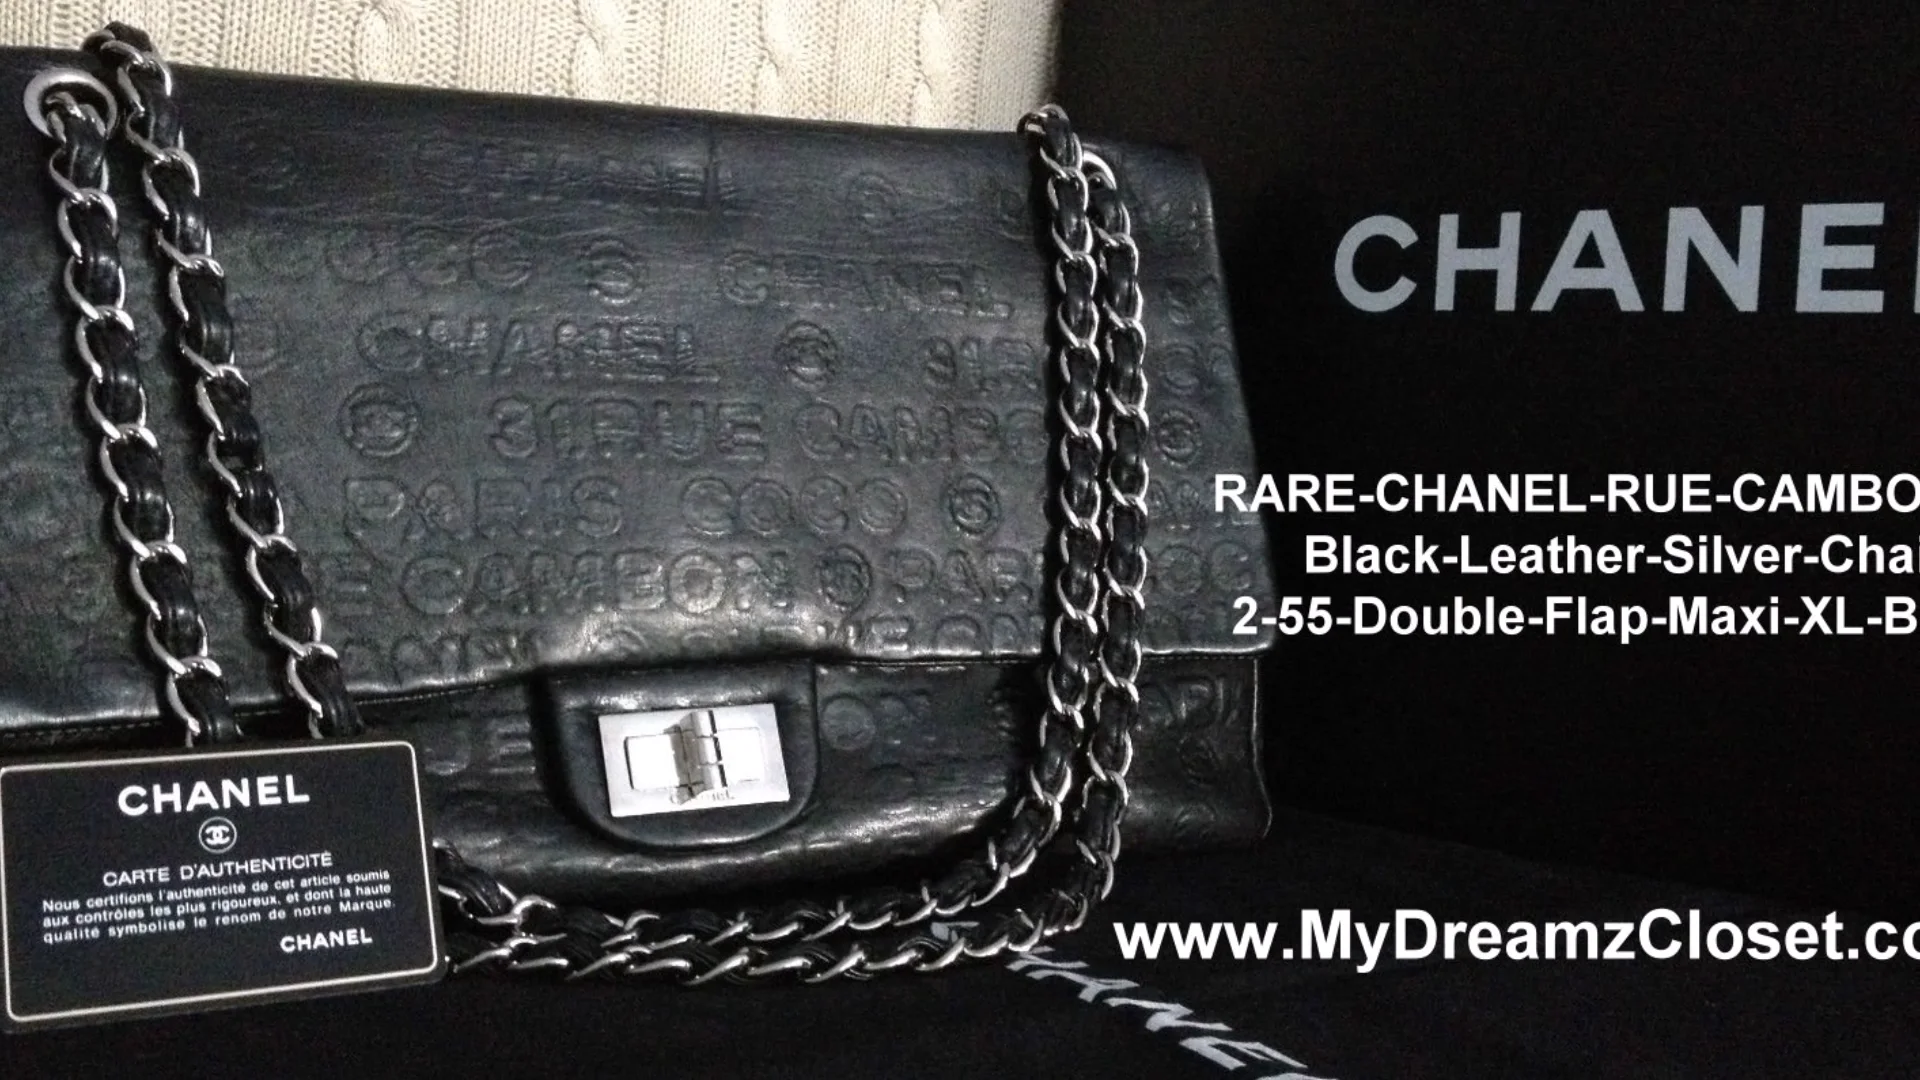 RARE-CHANEL-RUE-CAMBON-Black-Leather-Silver-Chain-2-55-Double-Flap-Maxi-XL- Bag on Vimeo